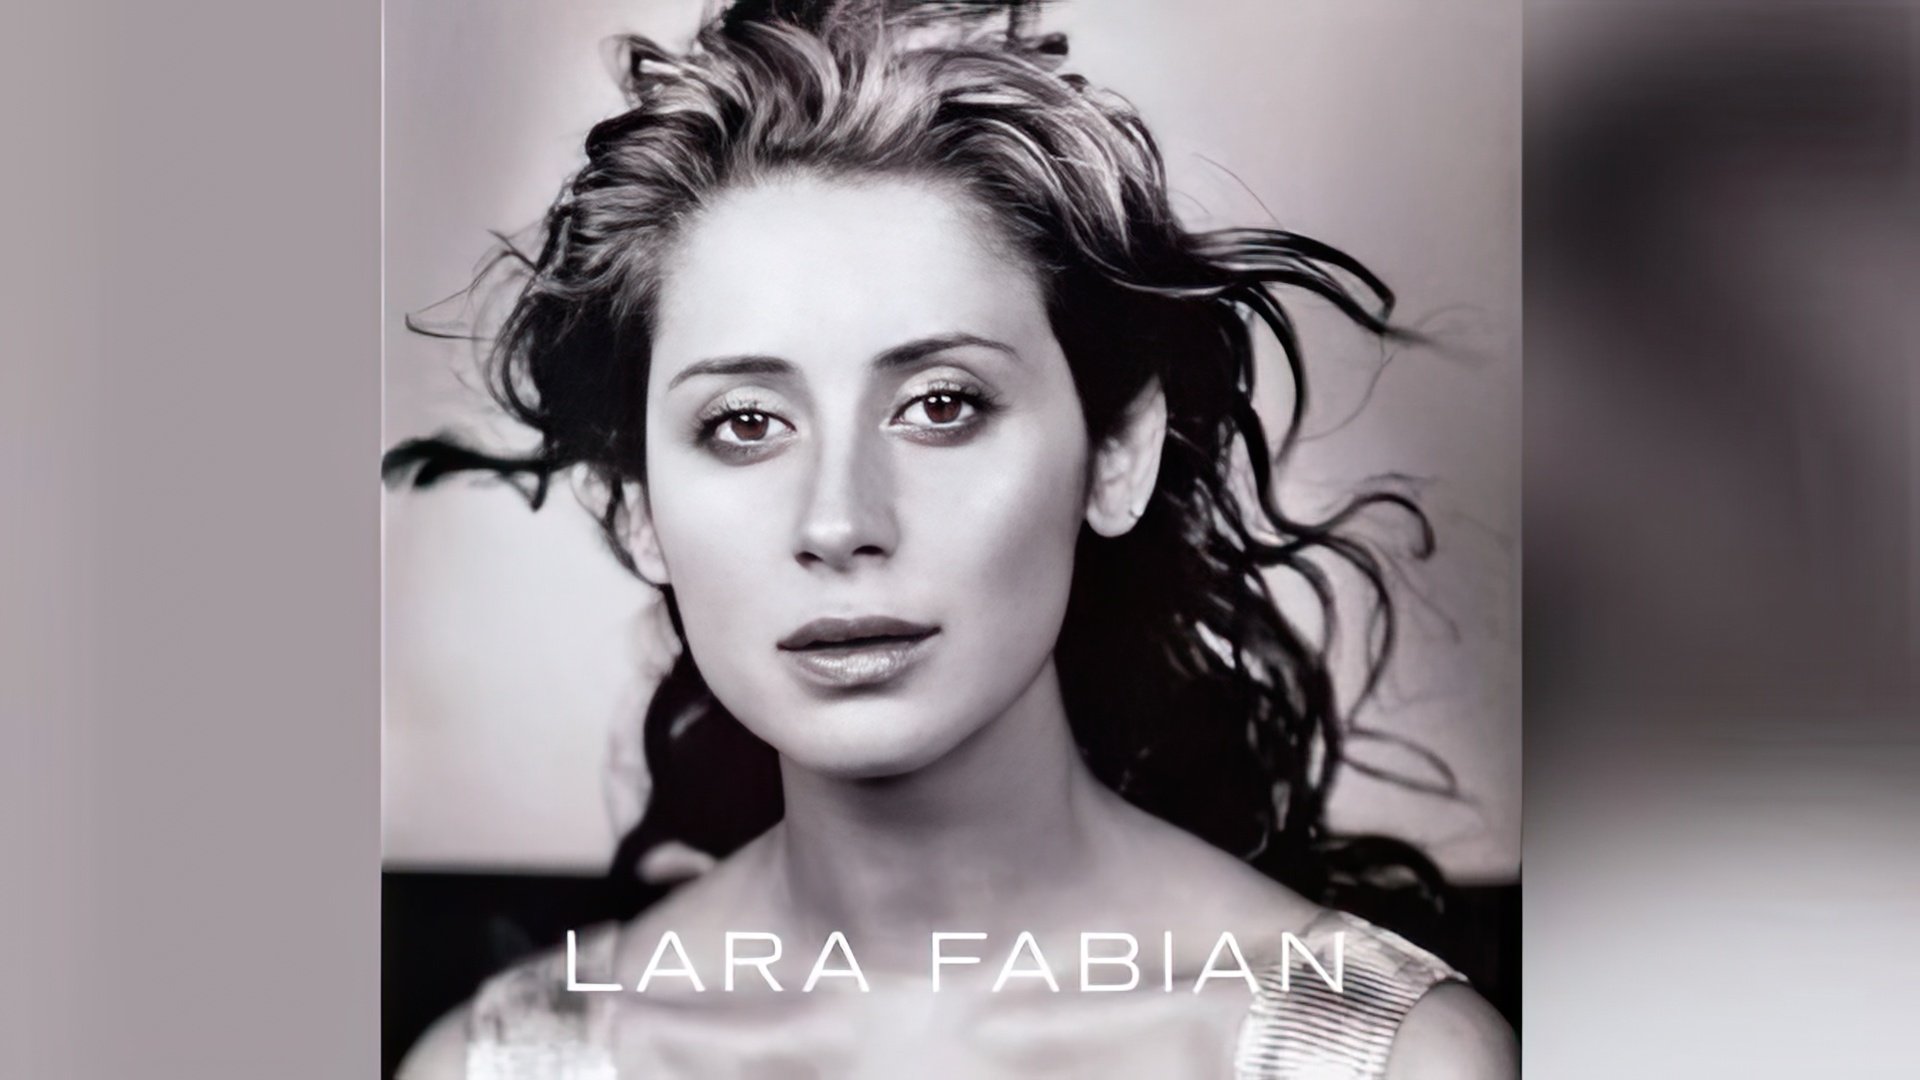 A cover of the first Lara Fabian’s album